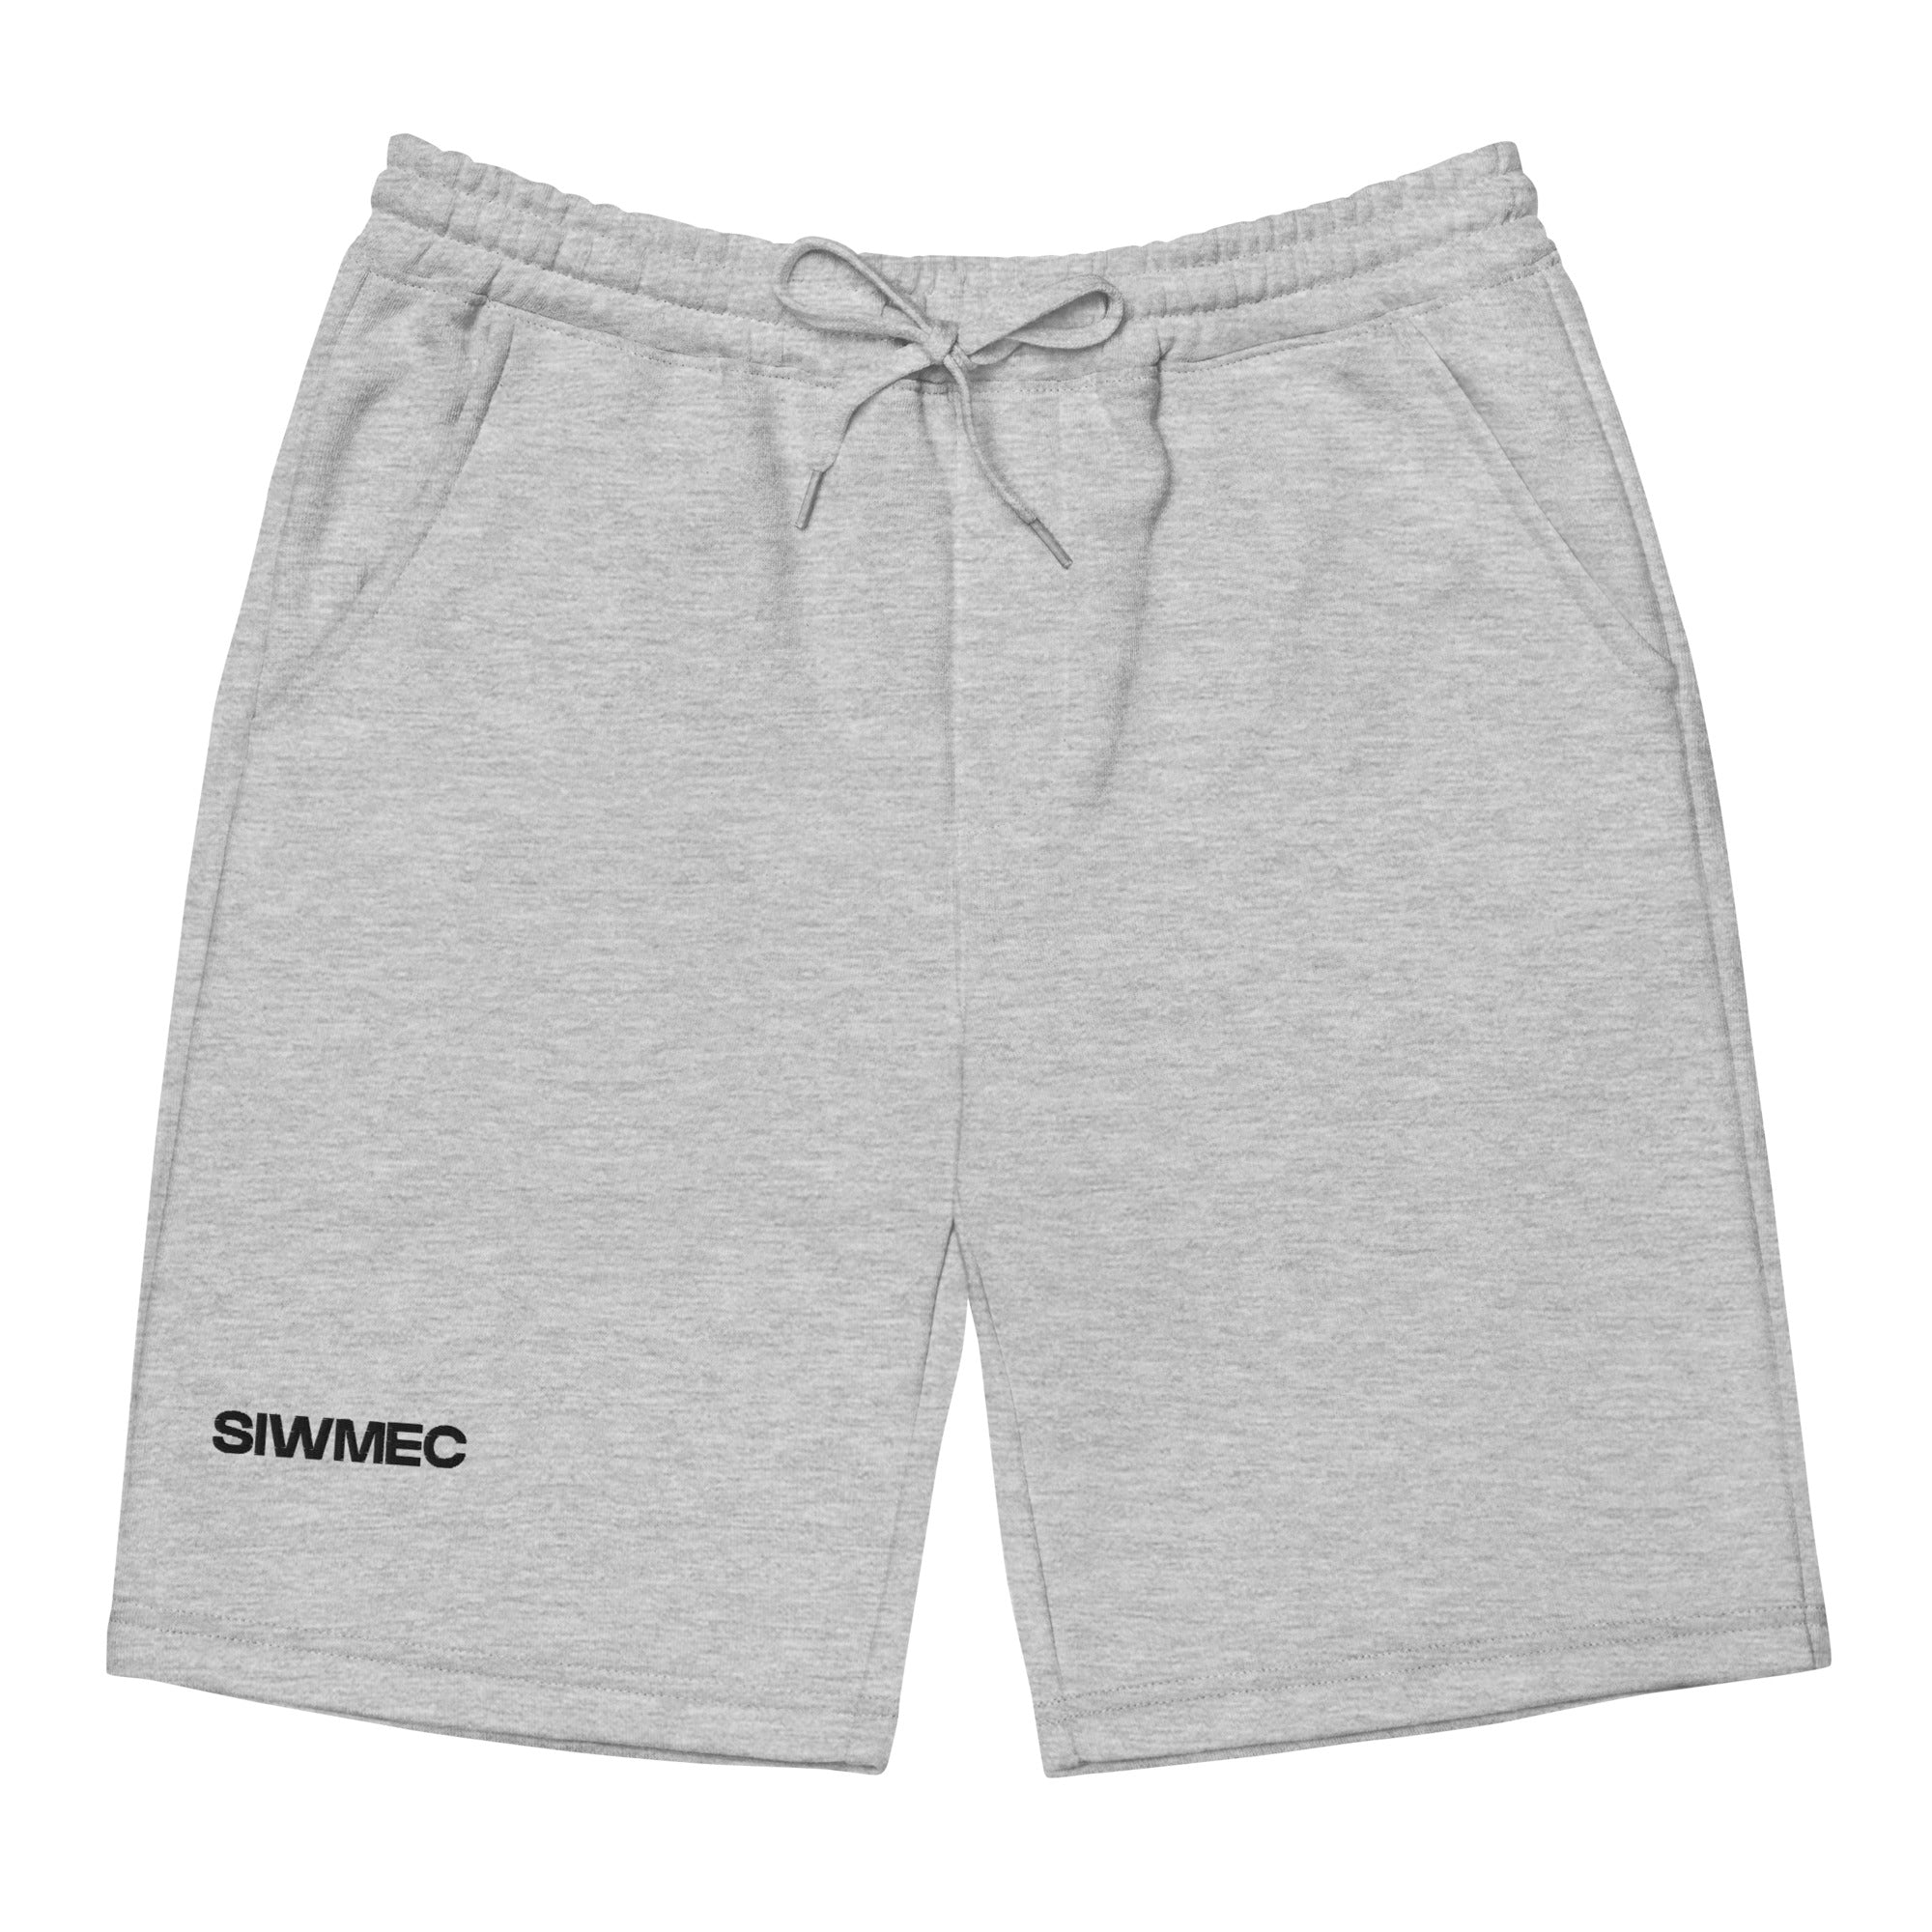 Grey Embroidered "SIWMEC" Shorts